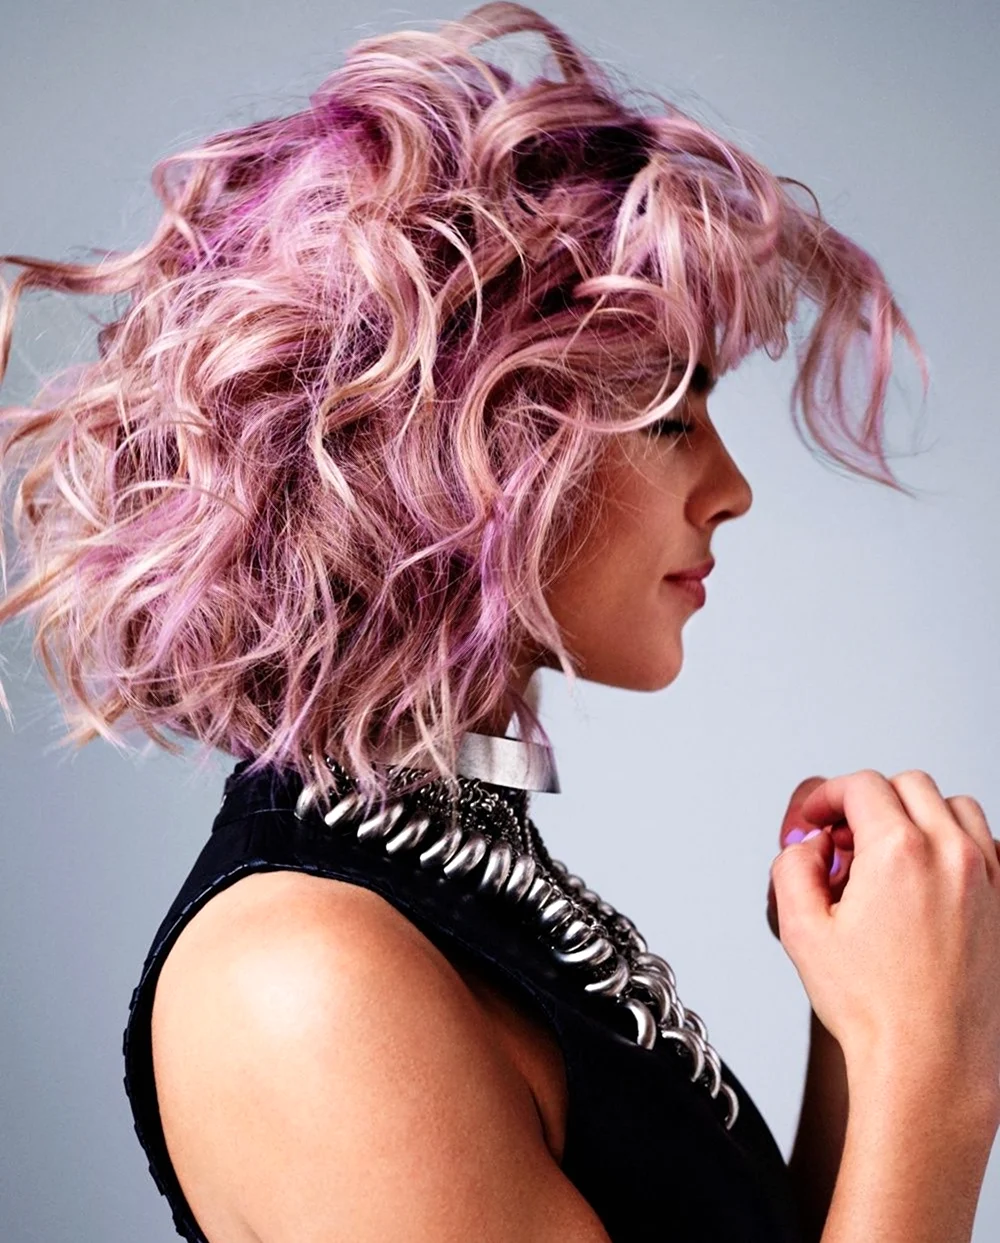 Эмили Бетт Рикардс с розовыми волосами